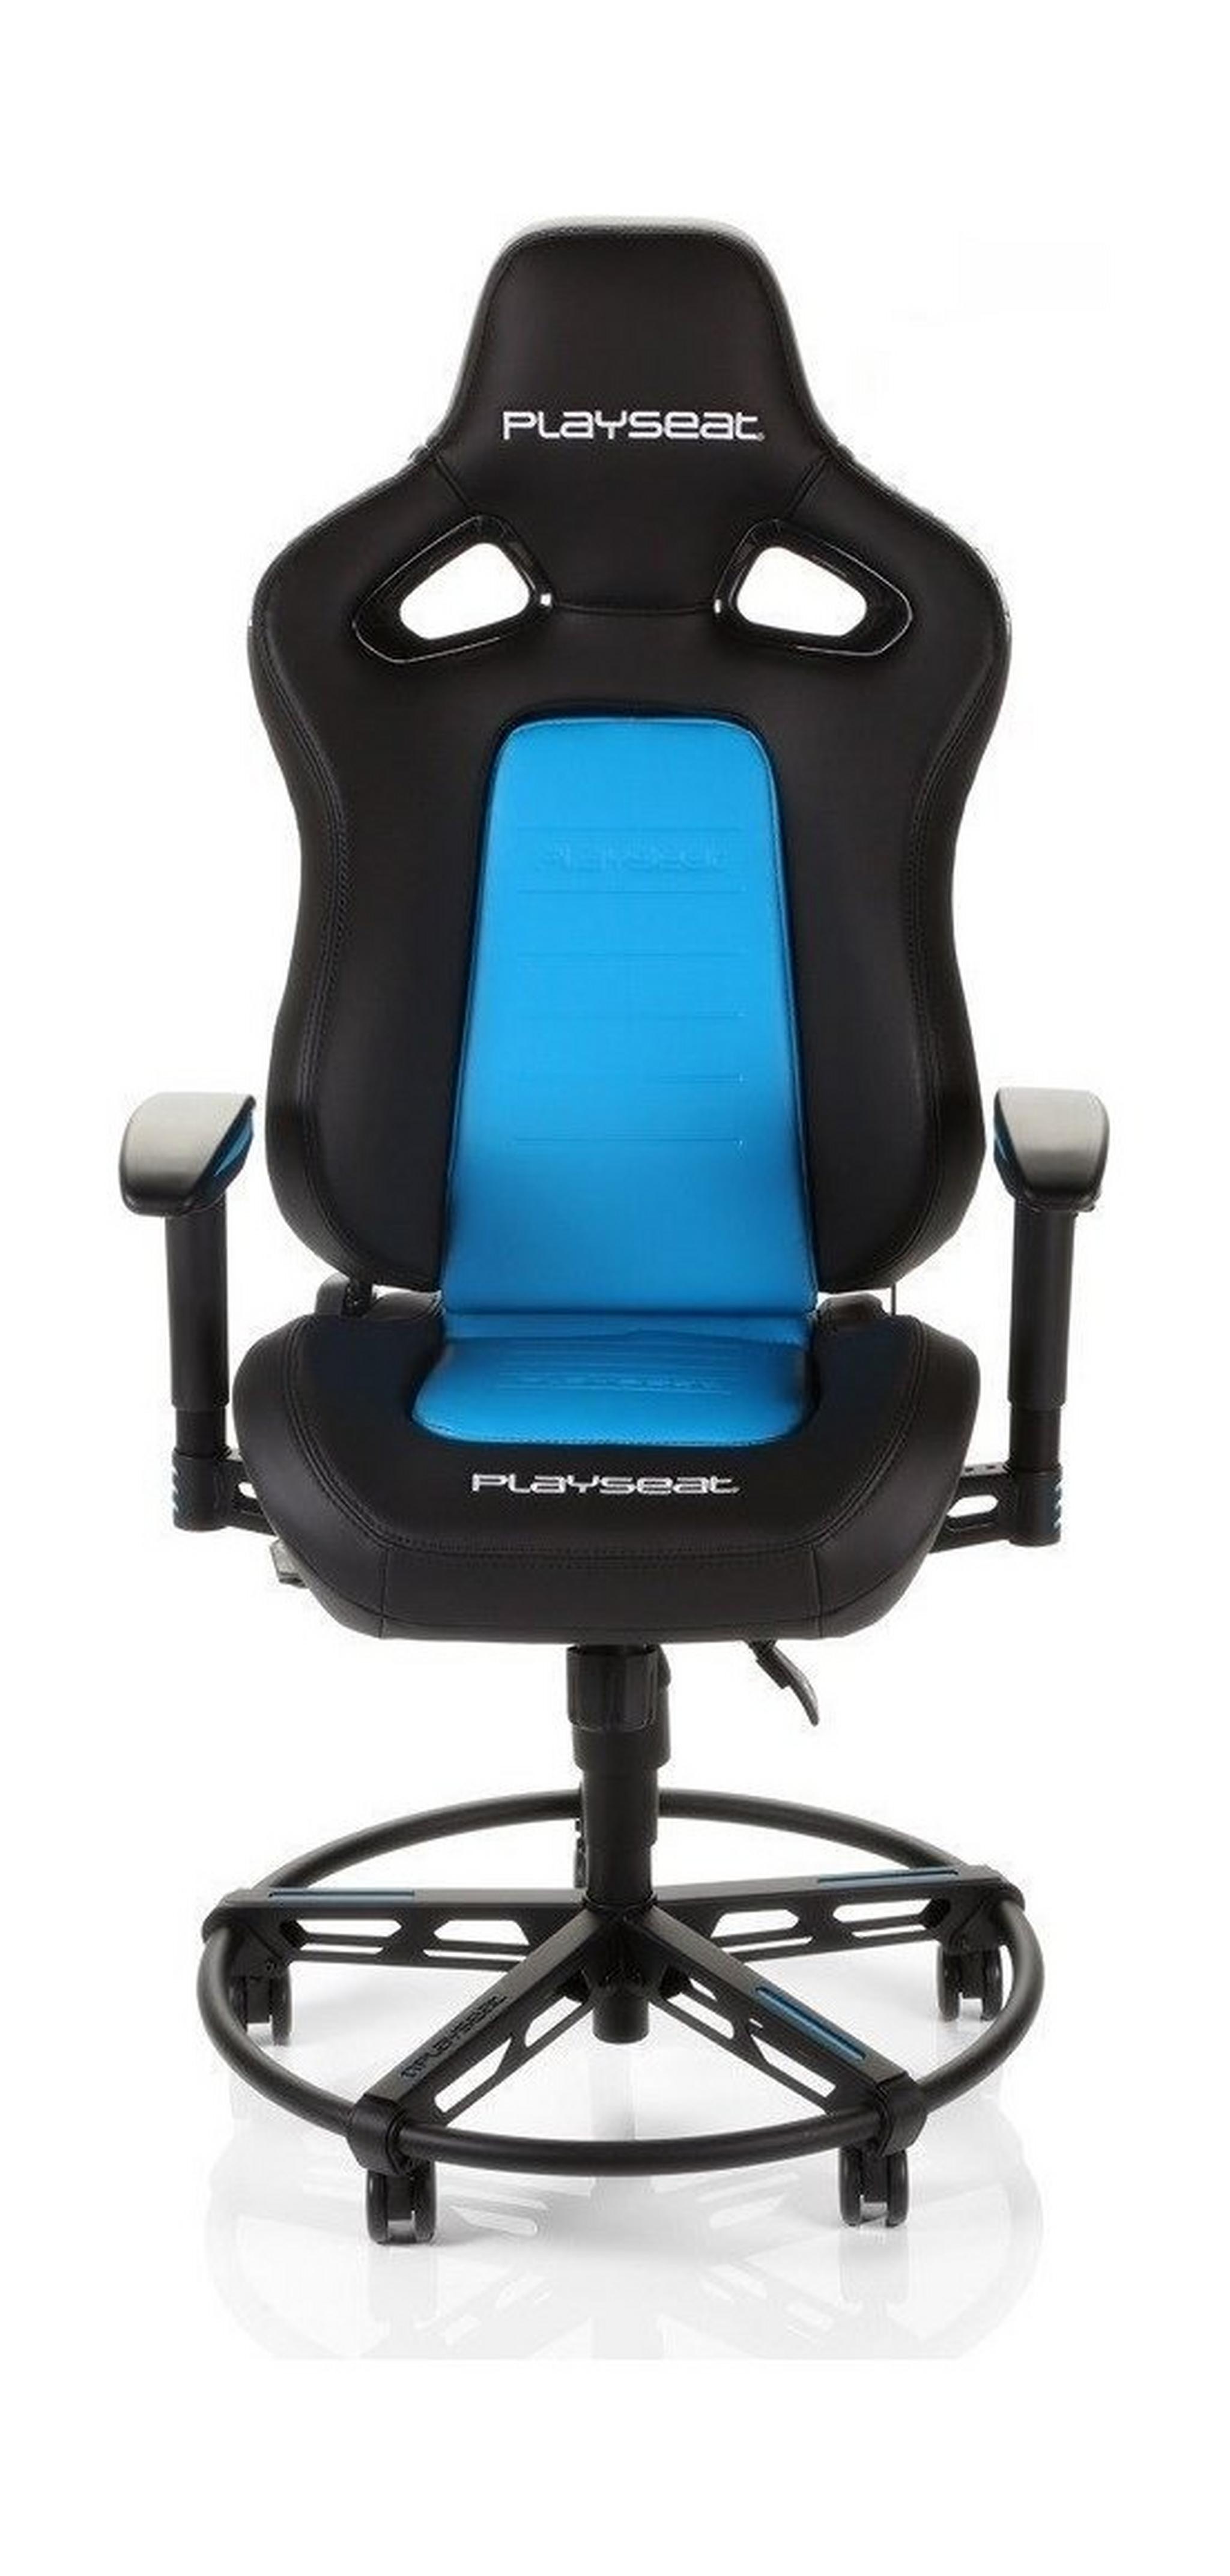 Playseats L33T Gaming Chair - Black/Blue